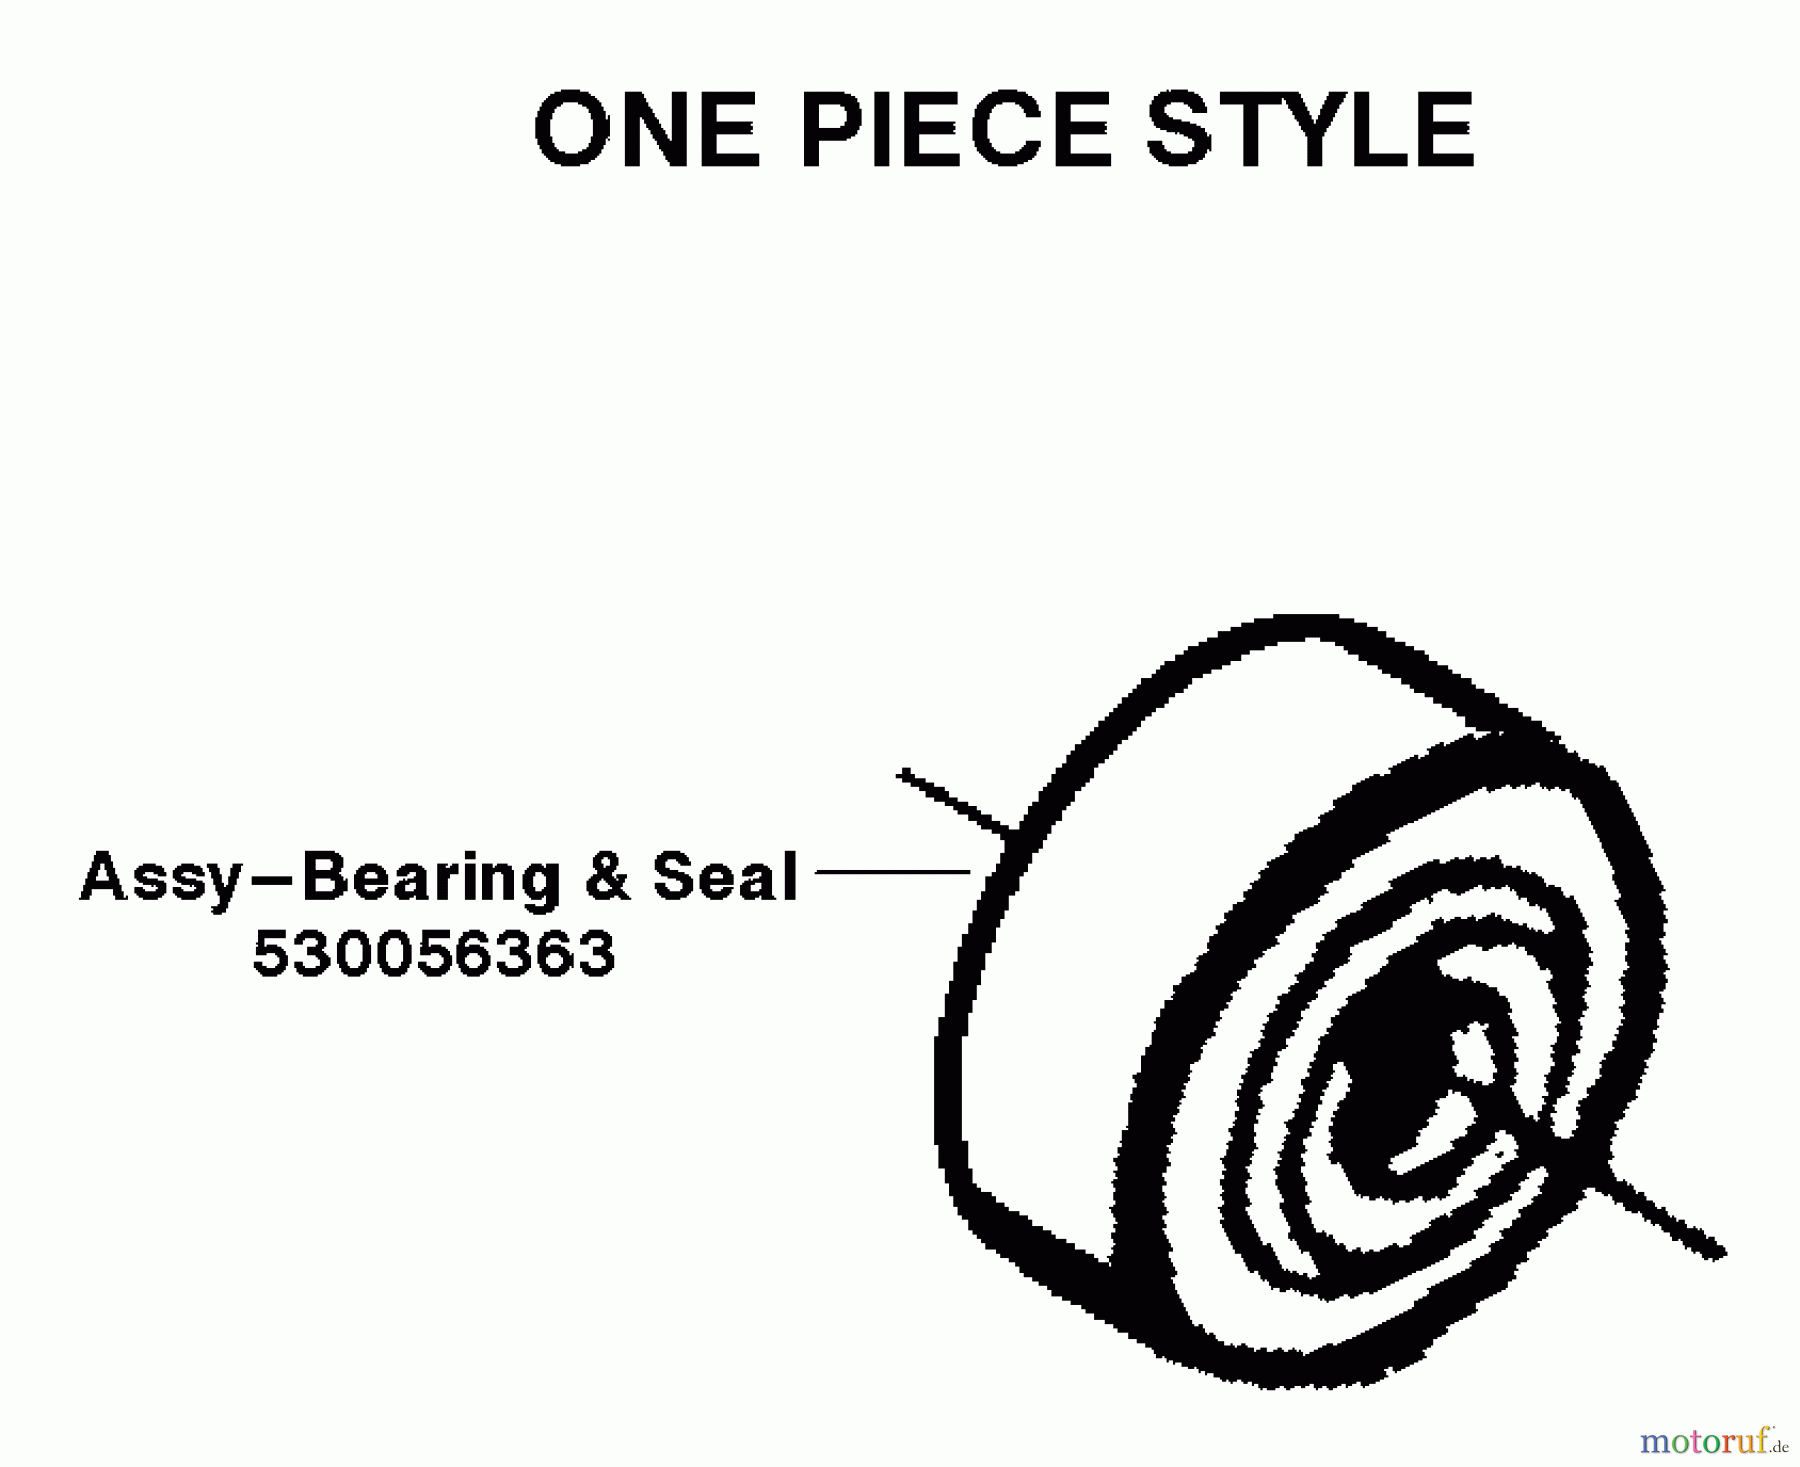  Poulan / Weed Eater Motorsägen PP295 (Type 3) - Poulan Pro Chainsaw Bearing & Seal - One Piece Style